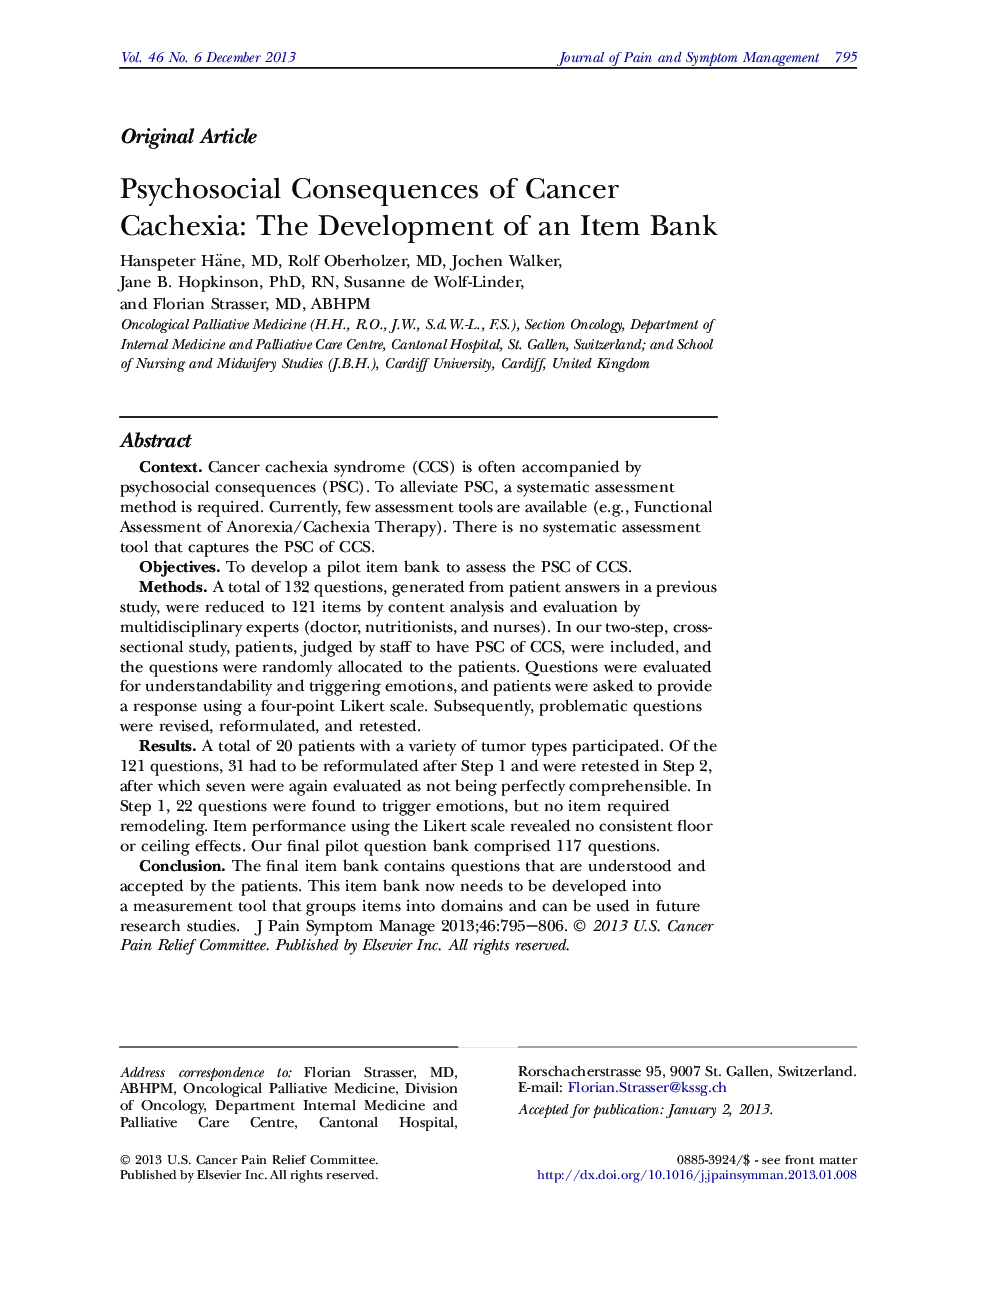 Original ArticlePsychosocial Consequences of Cancer Cachexia: The Development of an Item Bank